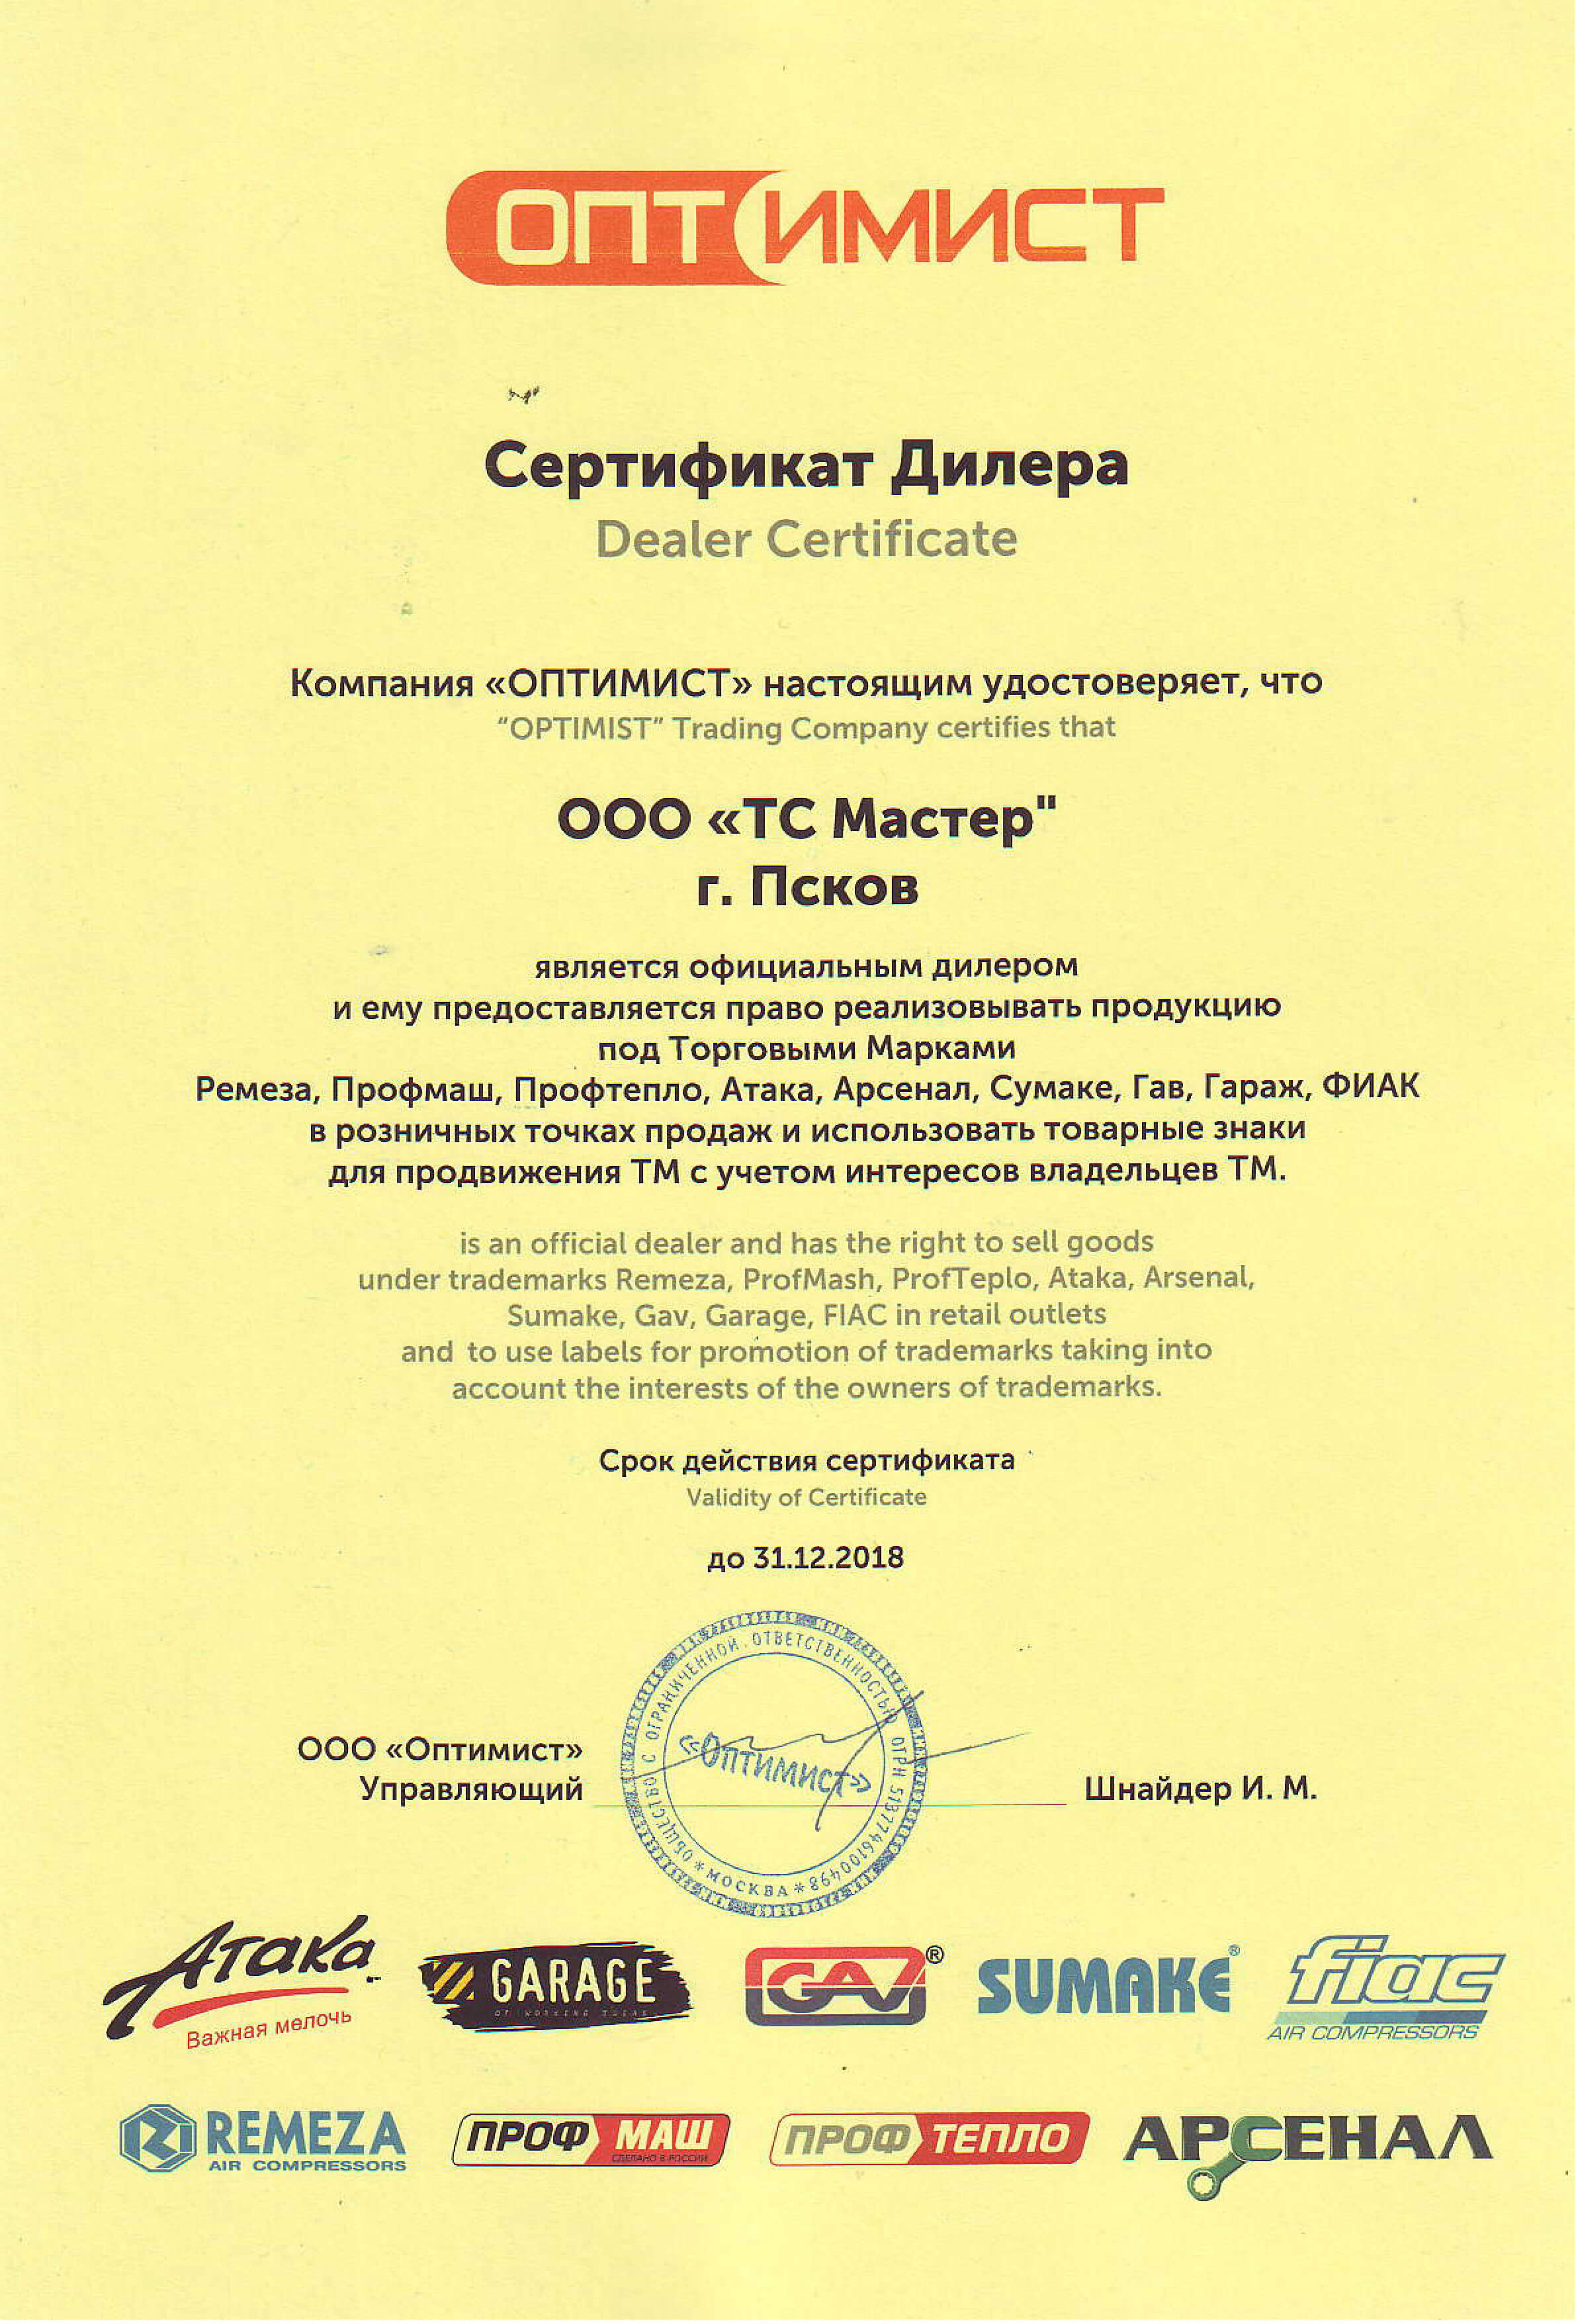 Сертификат дилера 3jIa6LZazQF7dY0cThPlBPo4fL1Pcp6R.jpg